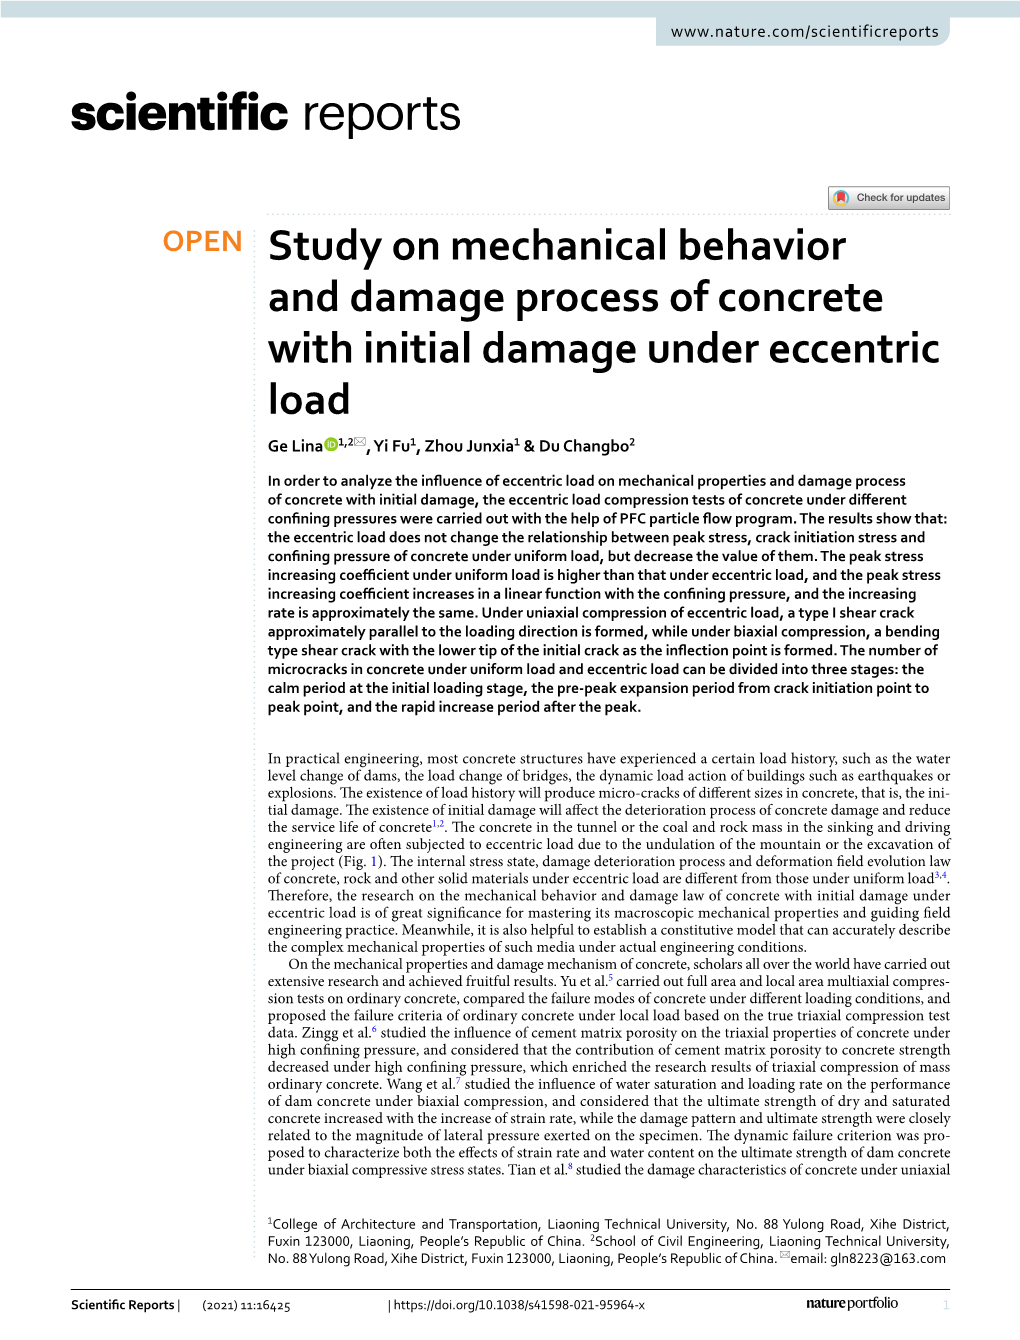 Study on Mechanical Behavior and Damage Process of Concrete with Initial Damage Under Eccentric Load Ge Lina 1,2*, Yi Fu1, Zhou Junxia1 & Du Changbo2